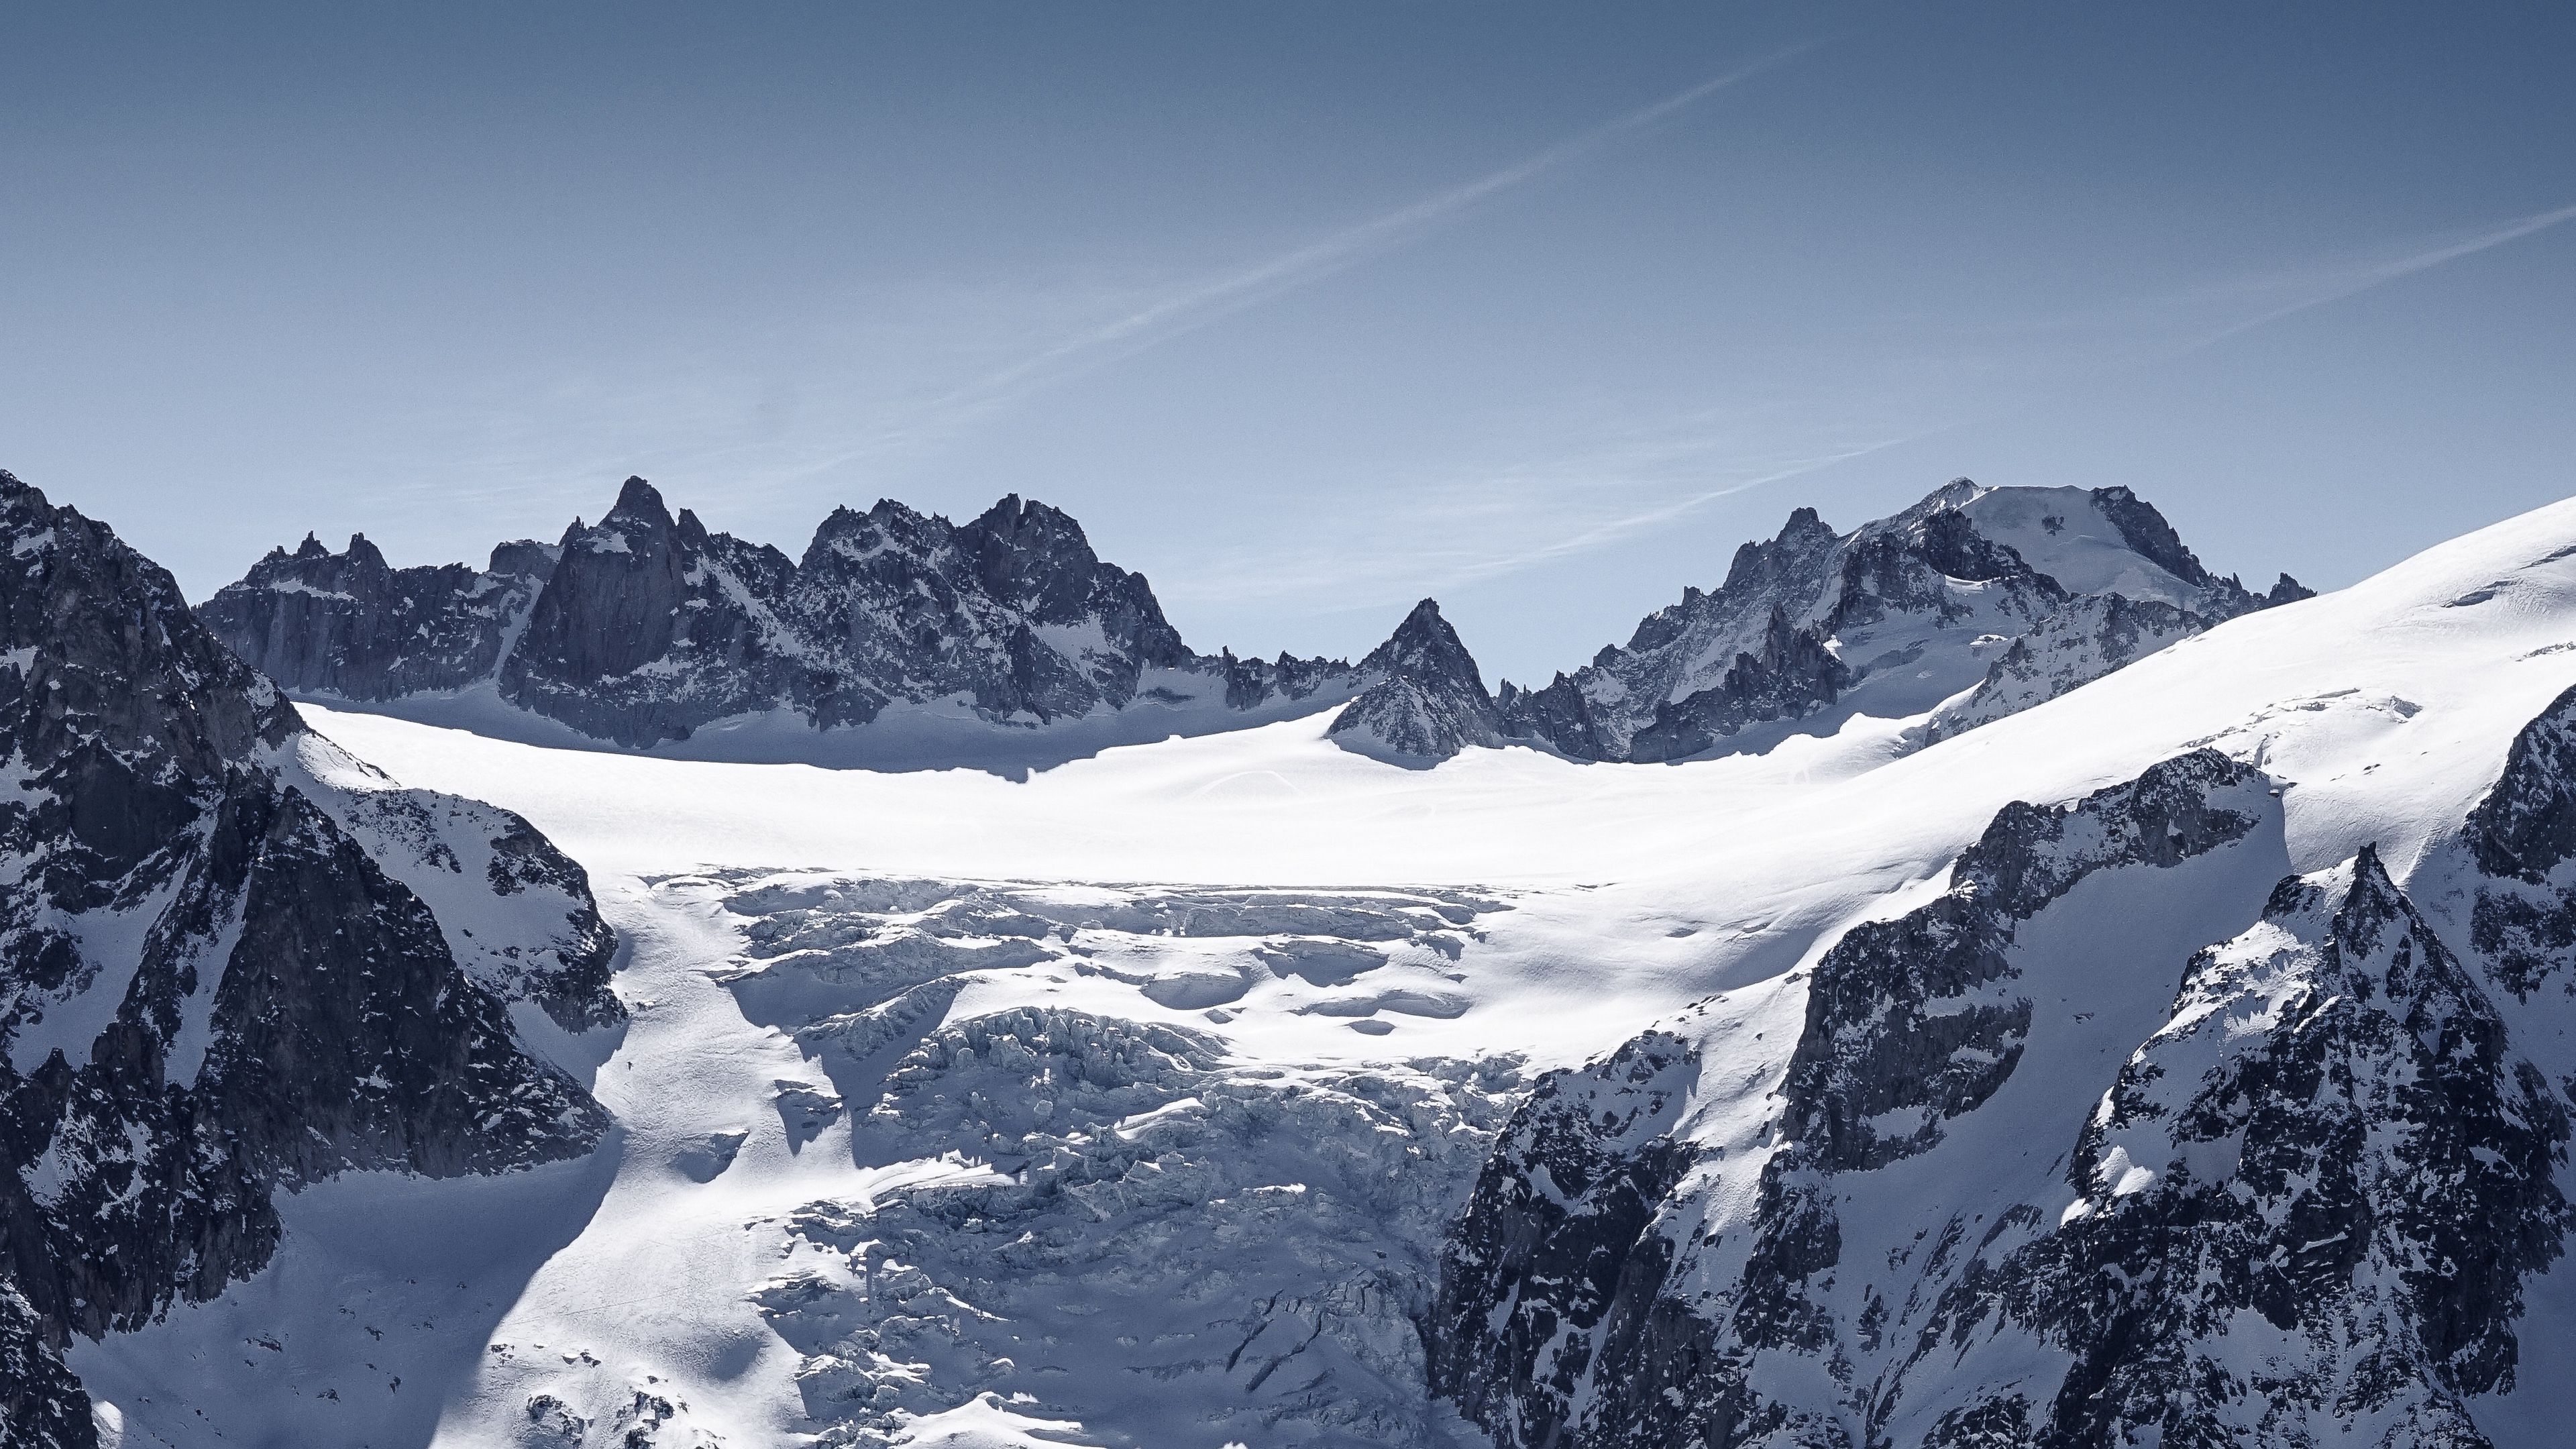 Download wallpaper 3840x2160 mountain, snow, slope, rocks, mont blanc,  switzerland 4k uhd 16:9 hd background